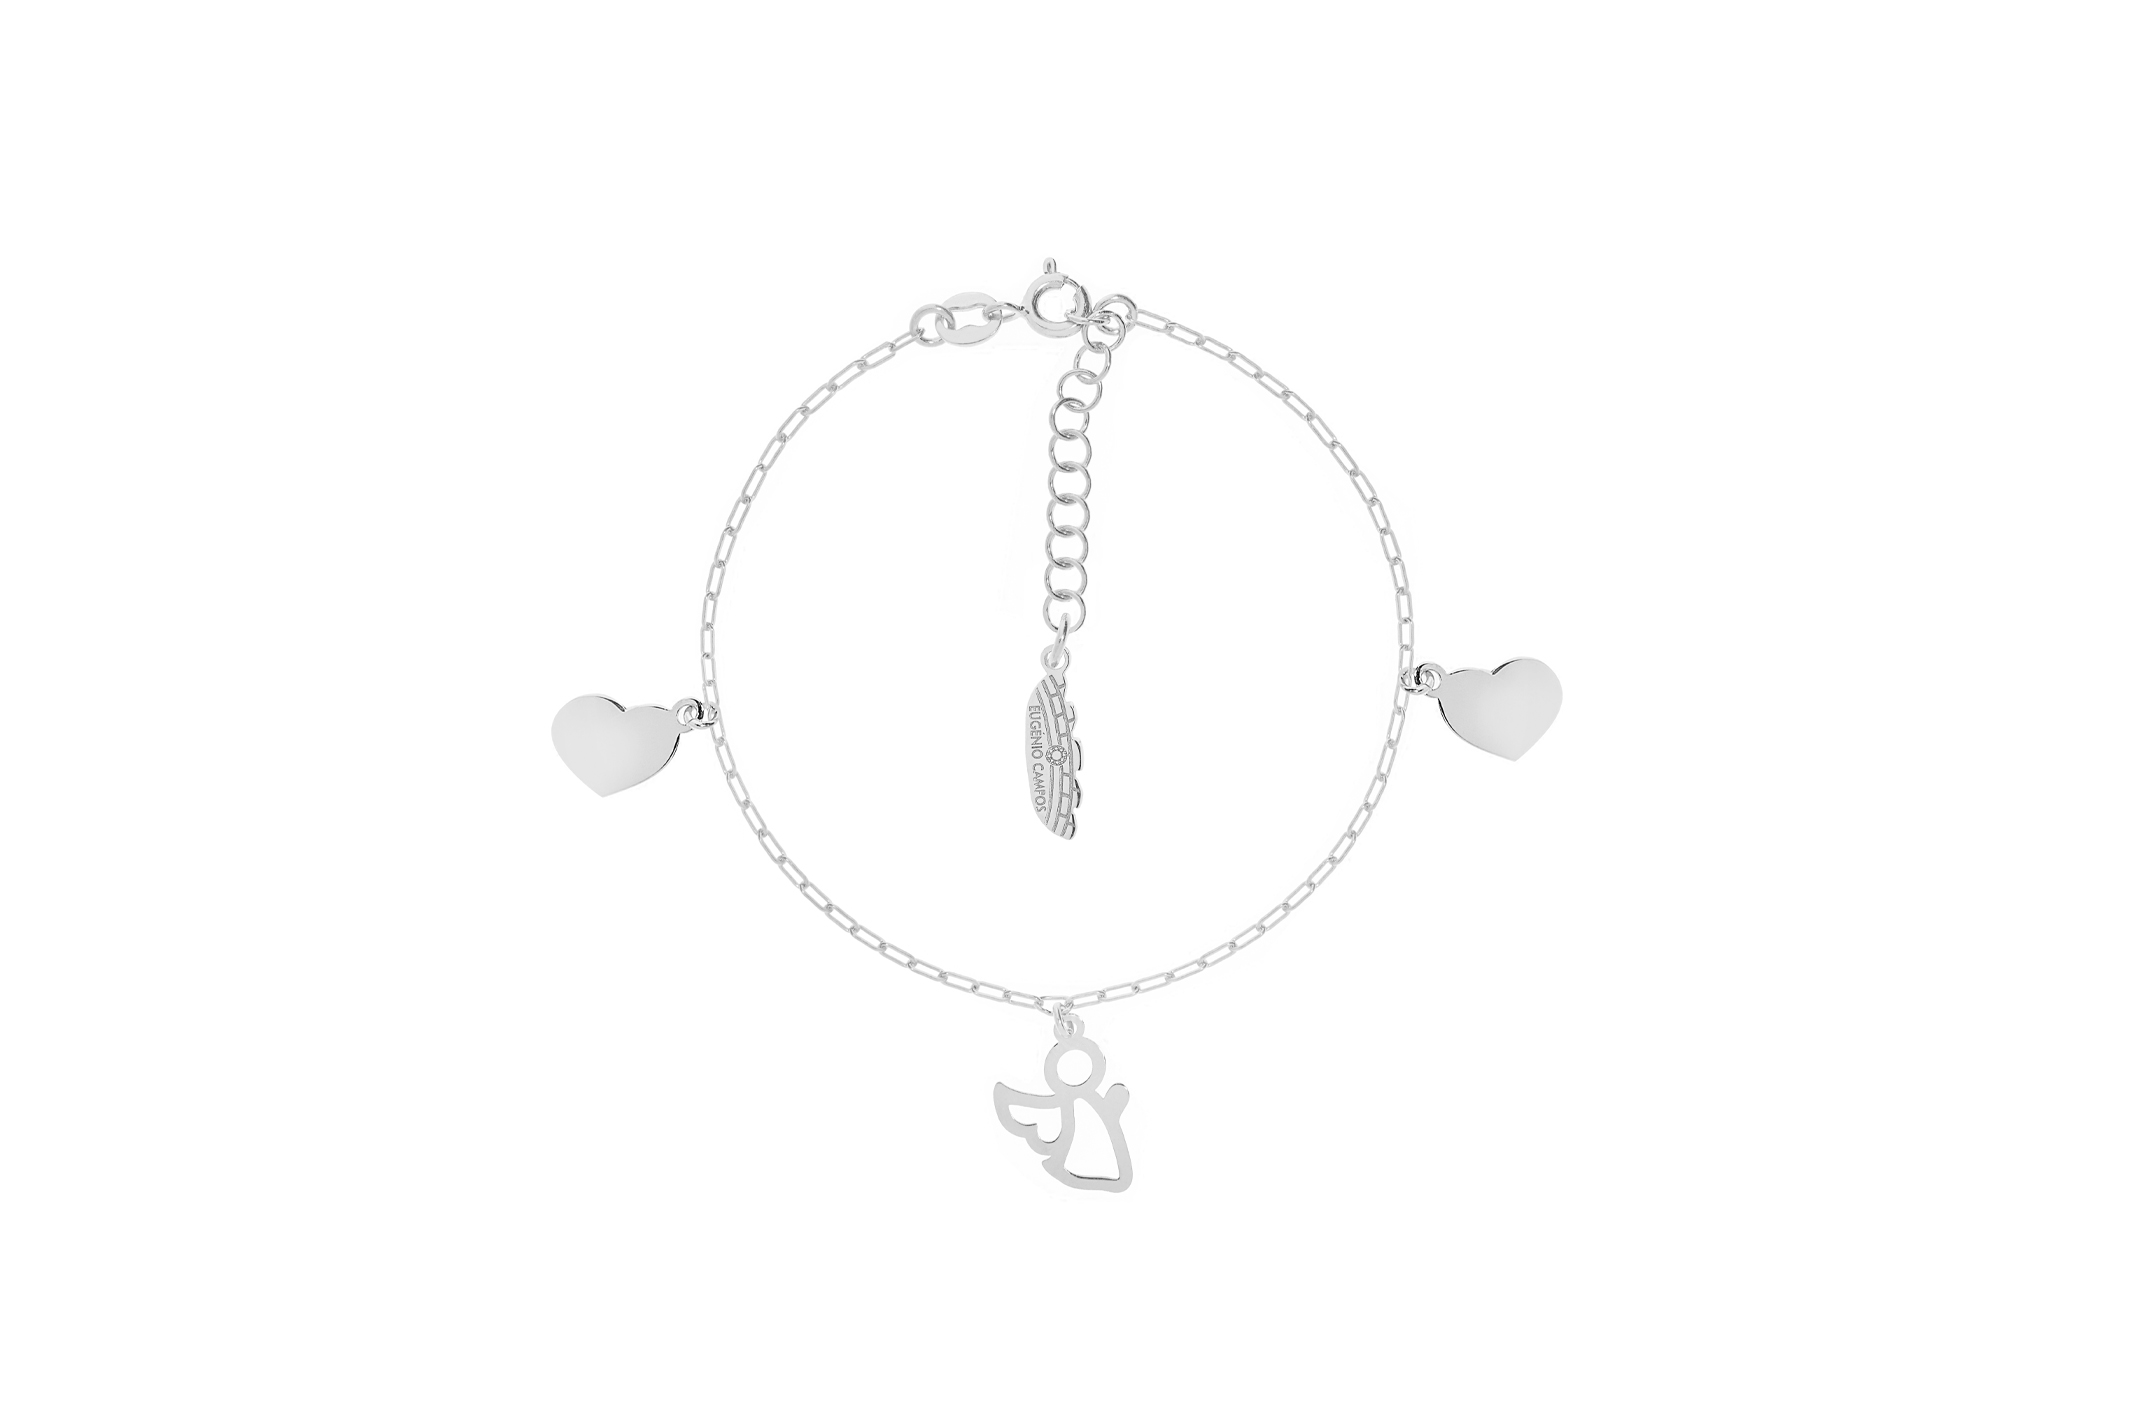 Jewel: bracelet;Material: silver 925;Weight: 1.7 gr;Color: white;Size: 16 cm + 3.5 cm; Pendent size:
1.2 cm